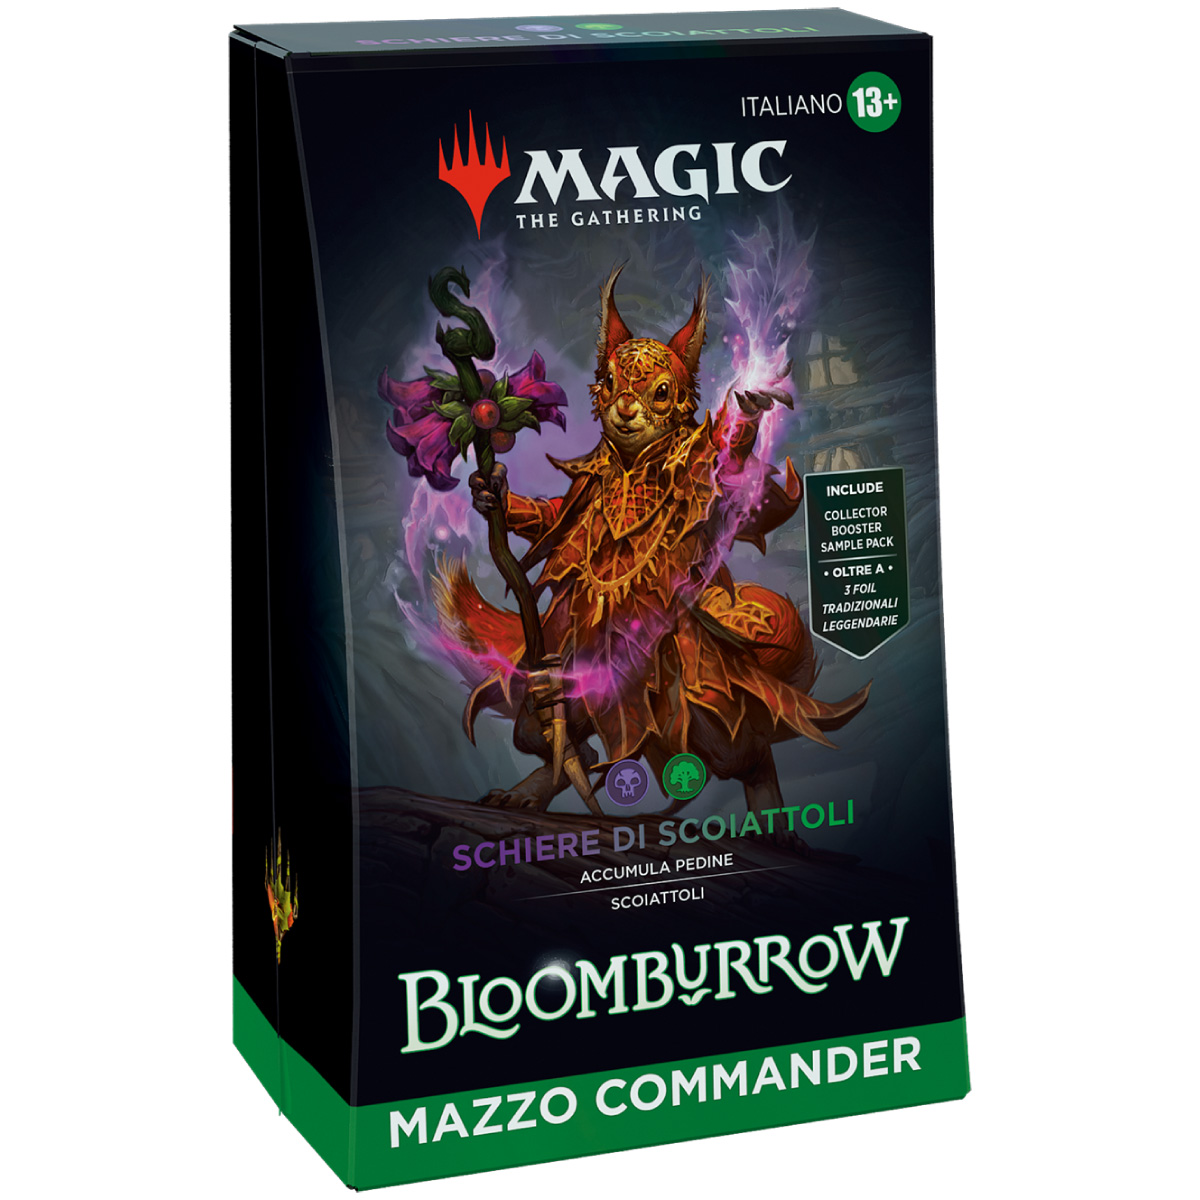 magic the gathering - bloomburrow - 4 mazzi commander (ita)